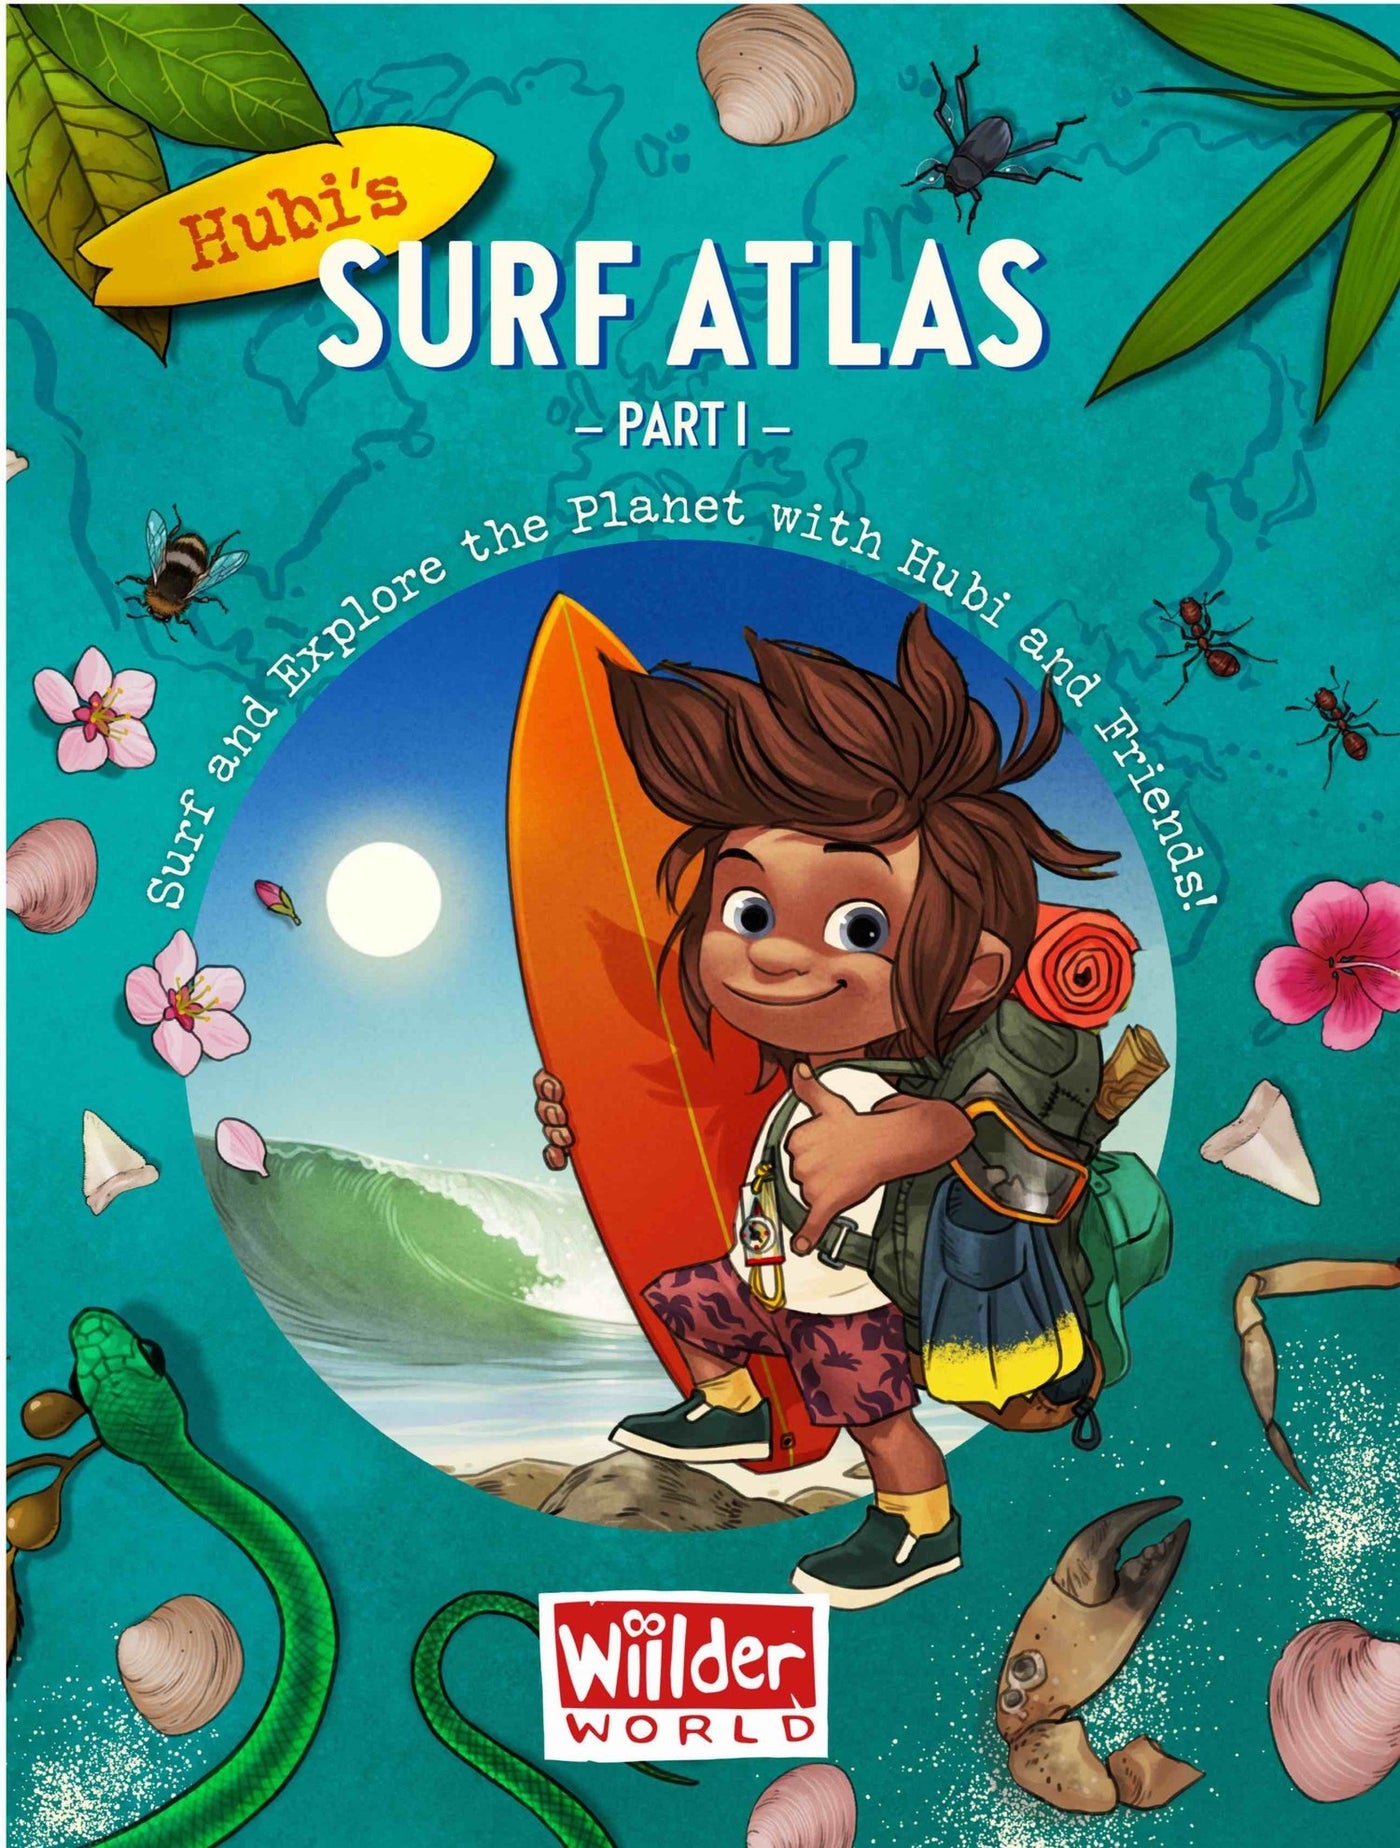 Hubi's Surf Atlas Part 1